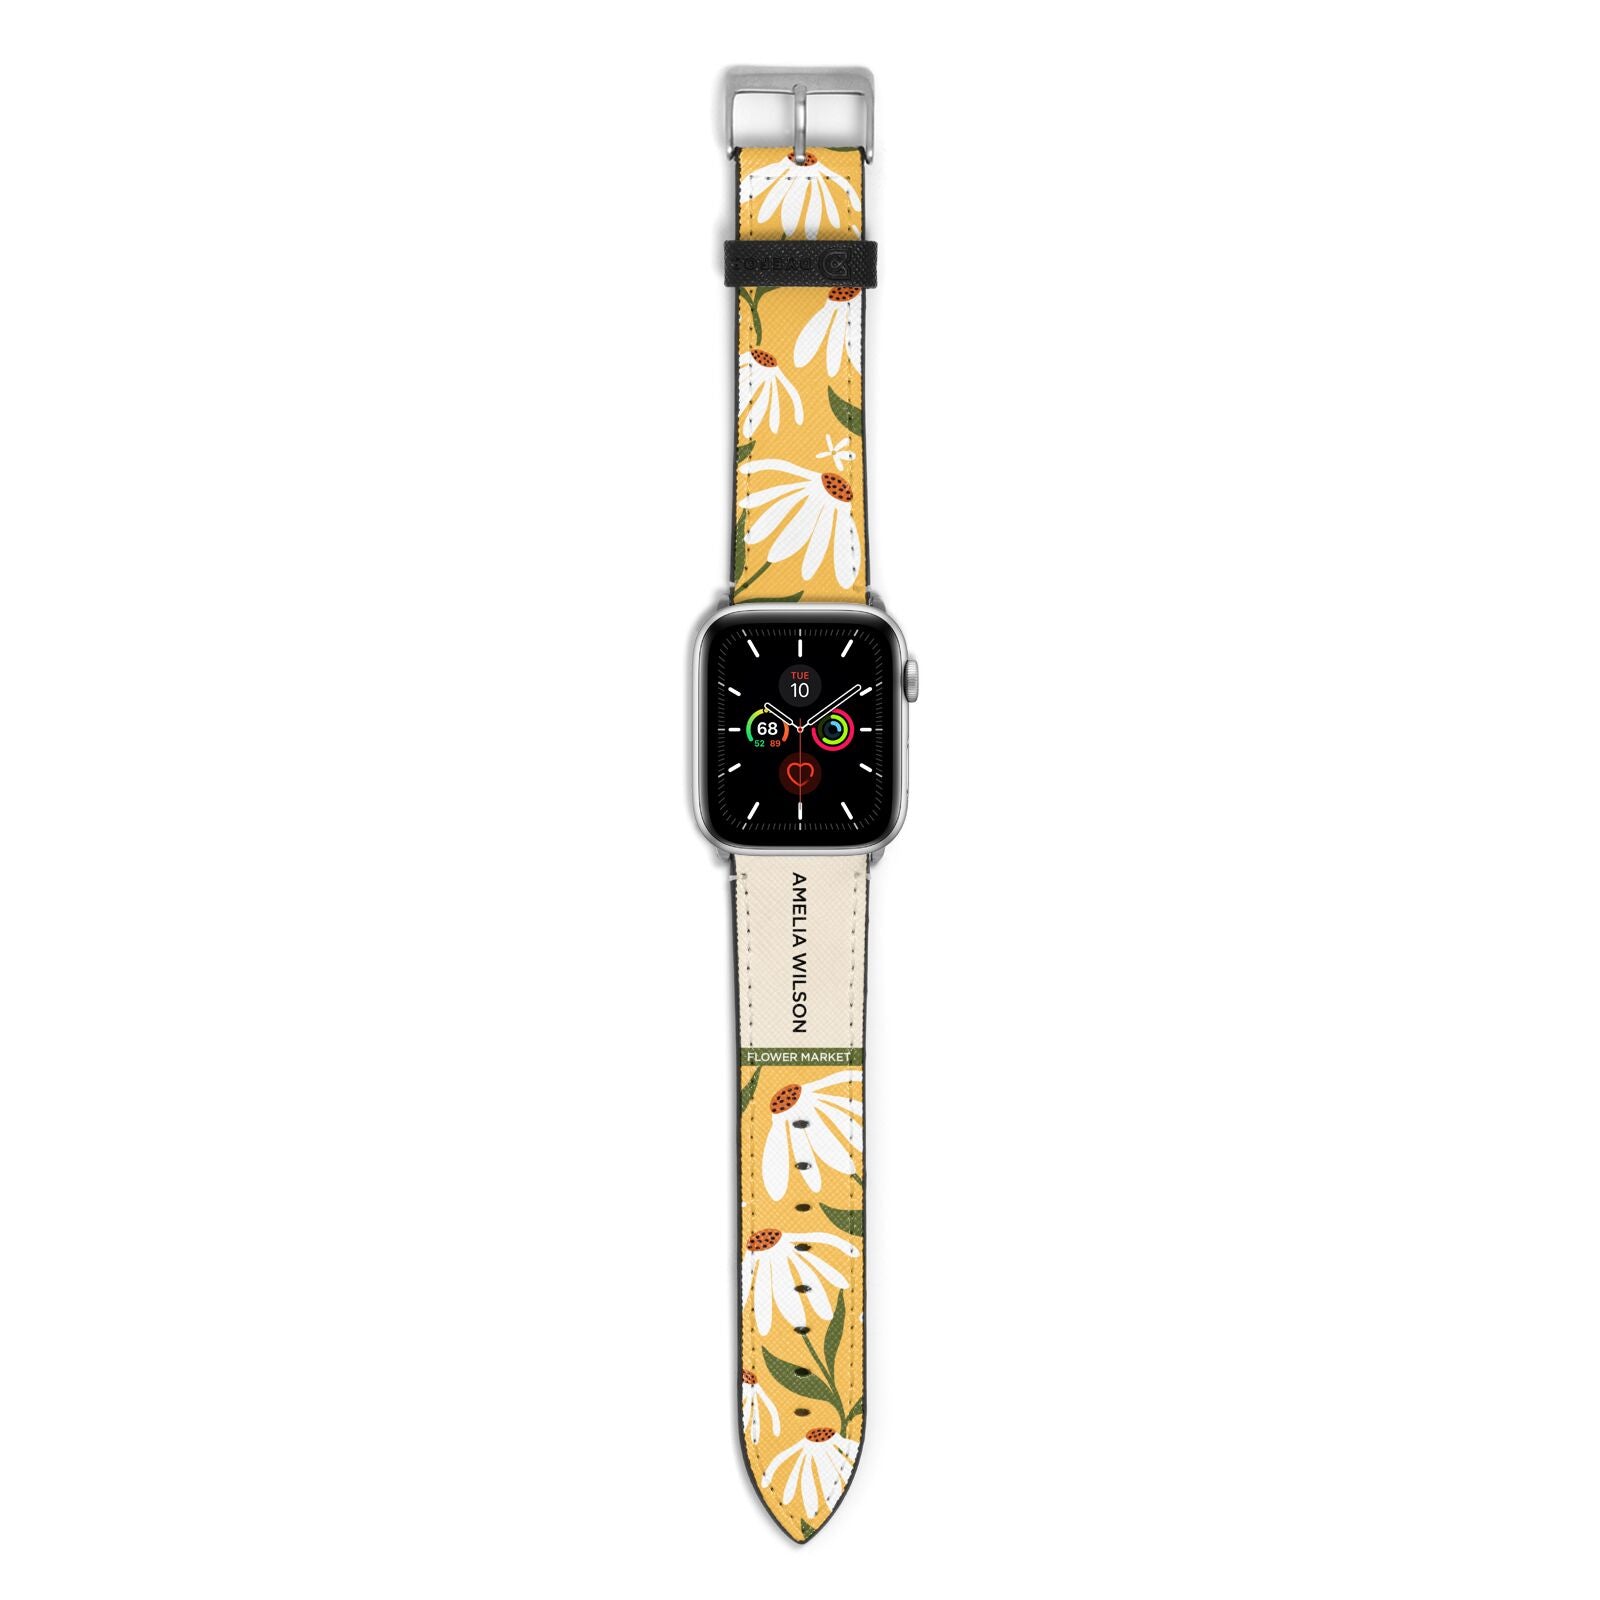 London Flower Market Apple Watch Strap with Silver Hardware